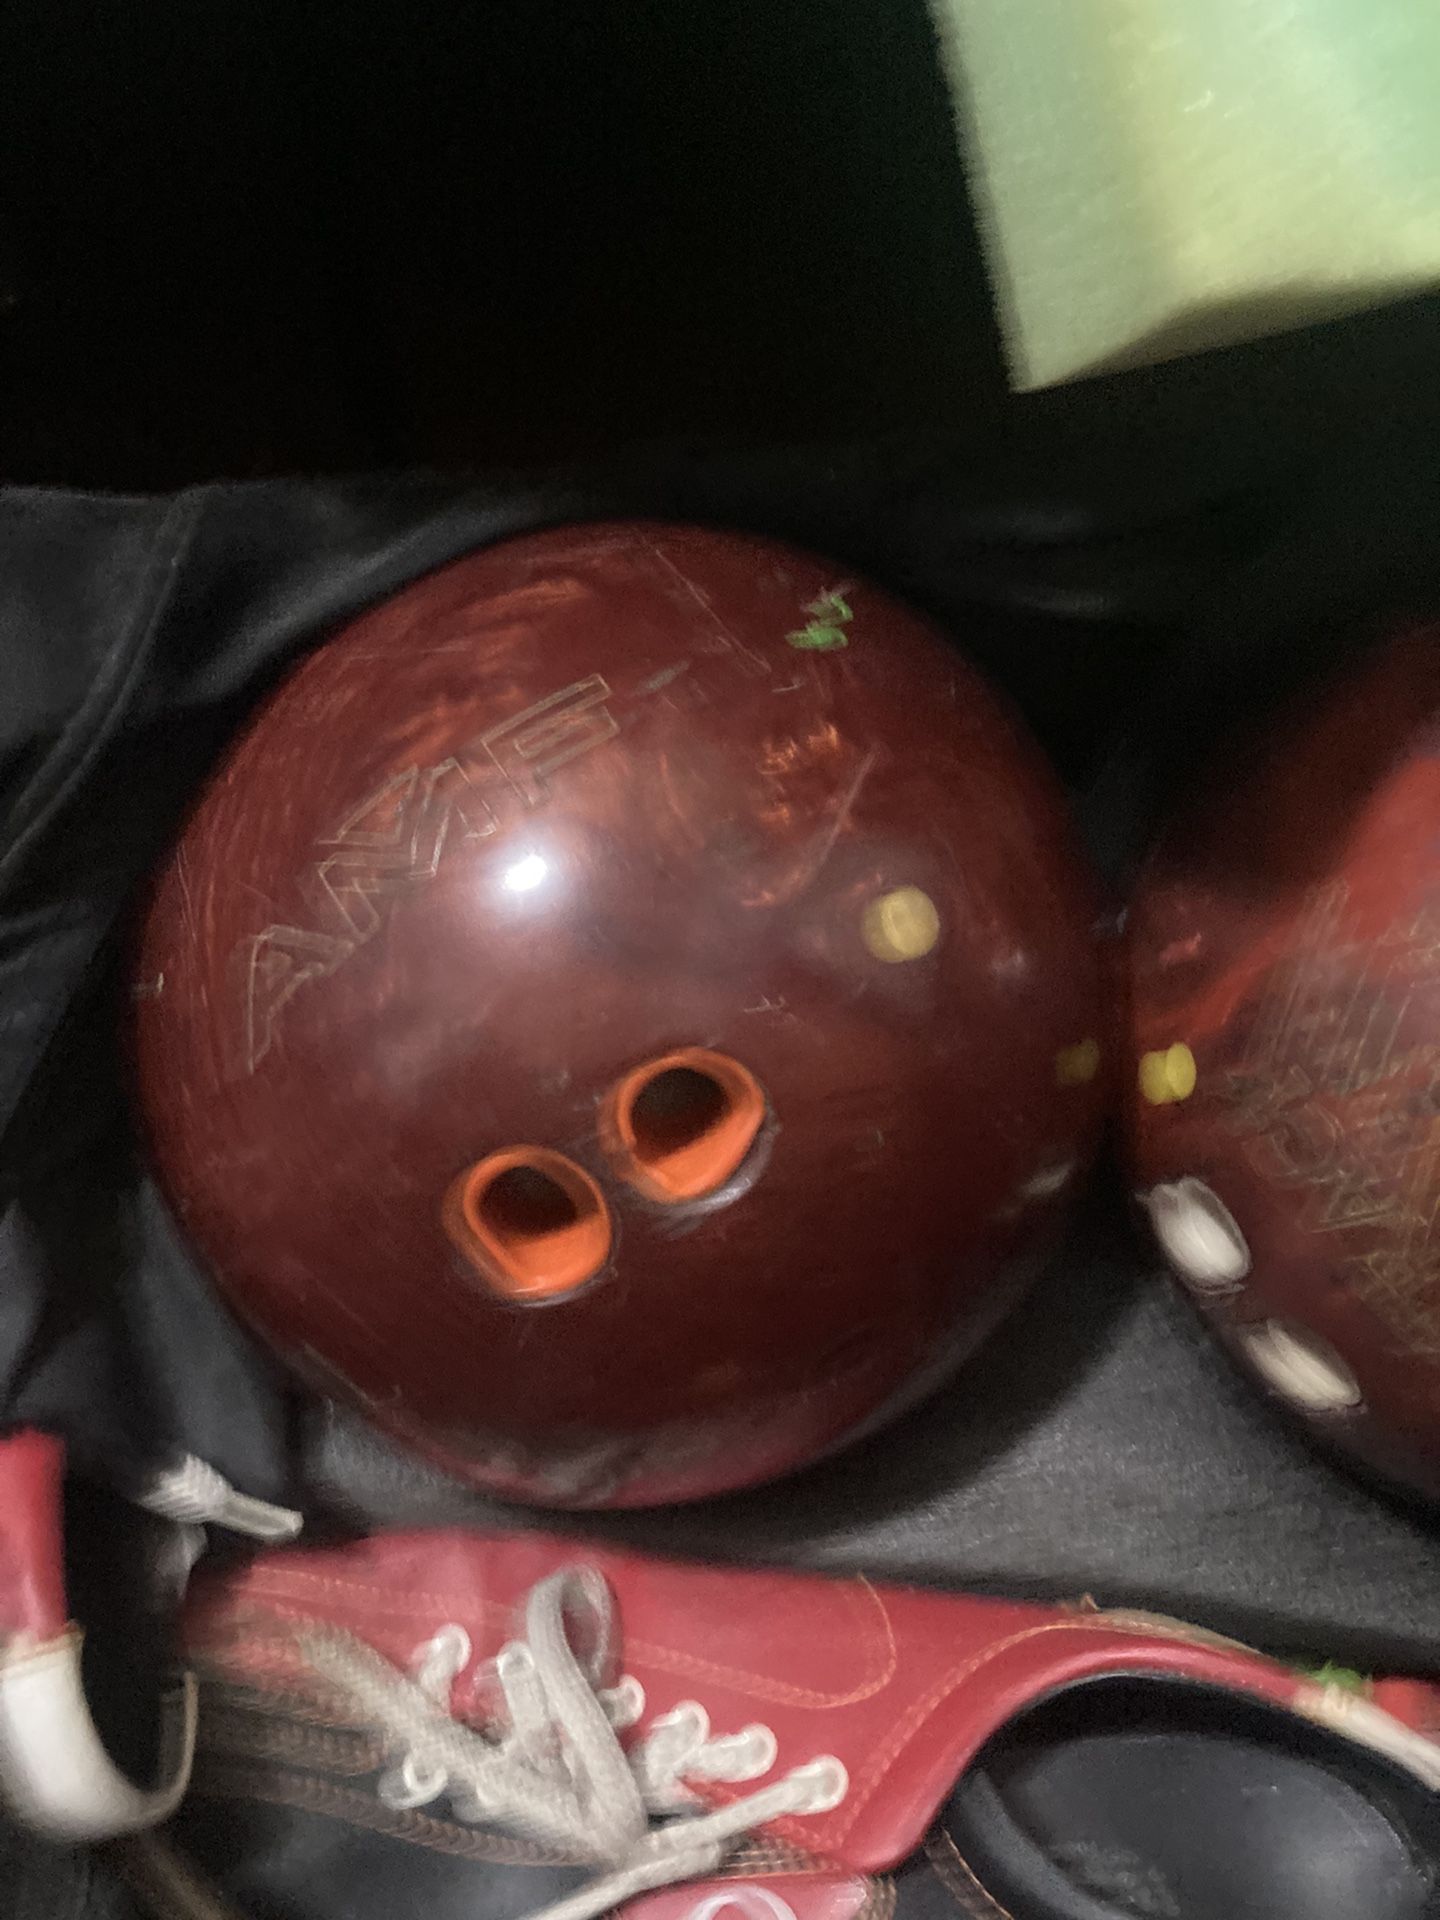 Bowling Balls 